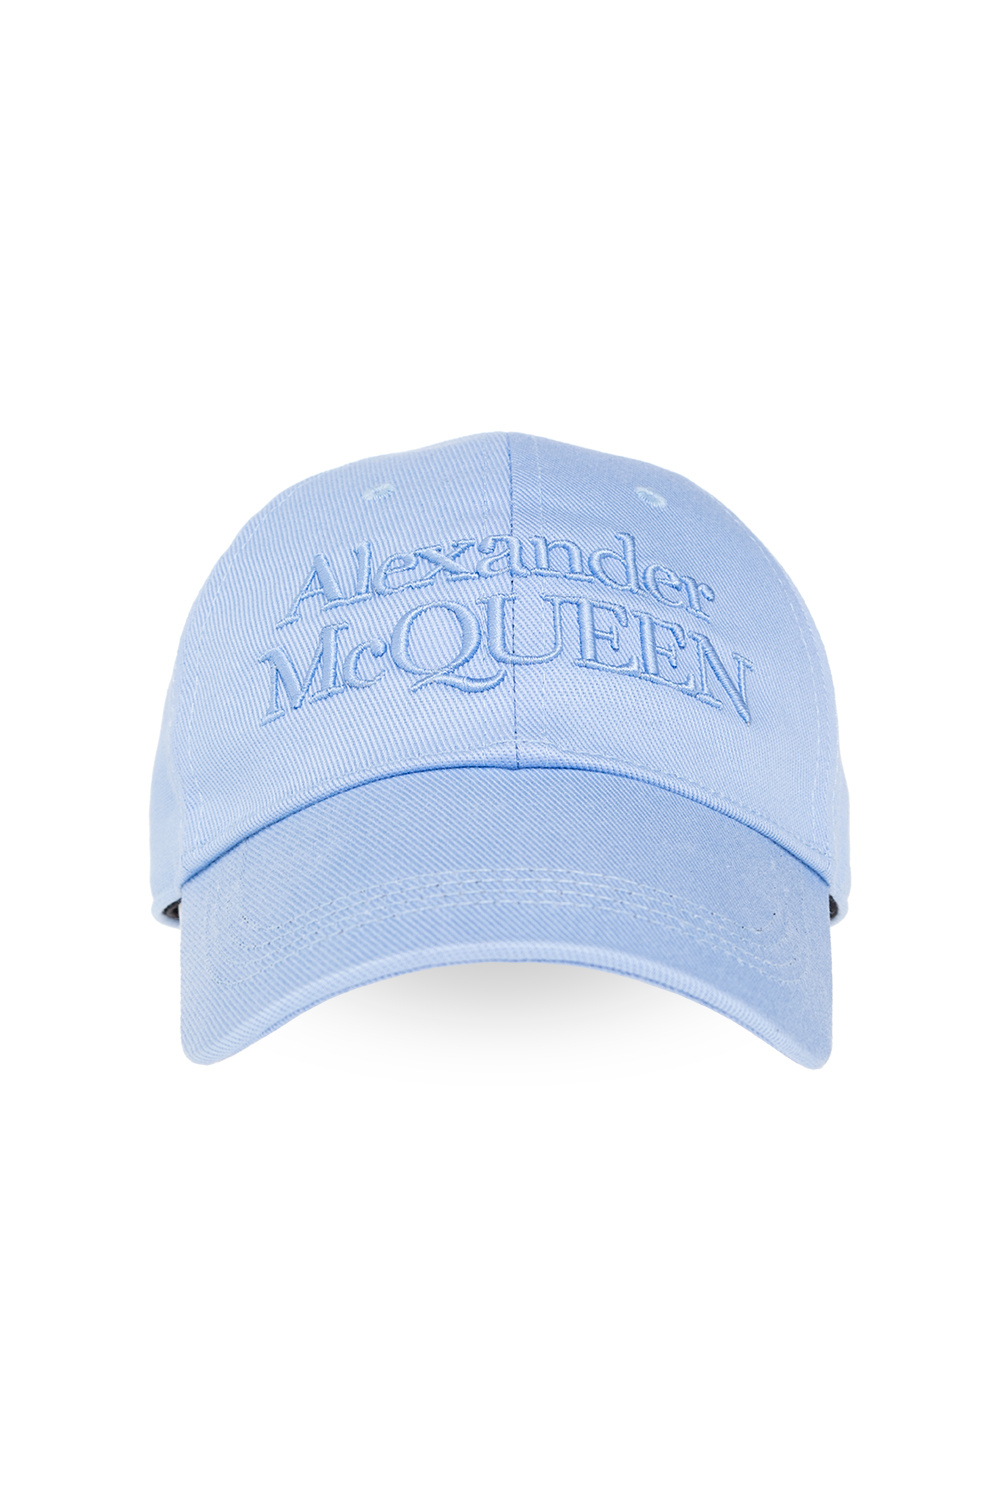 Alexander McQueen alexander mcqueen silver clutch